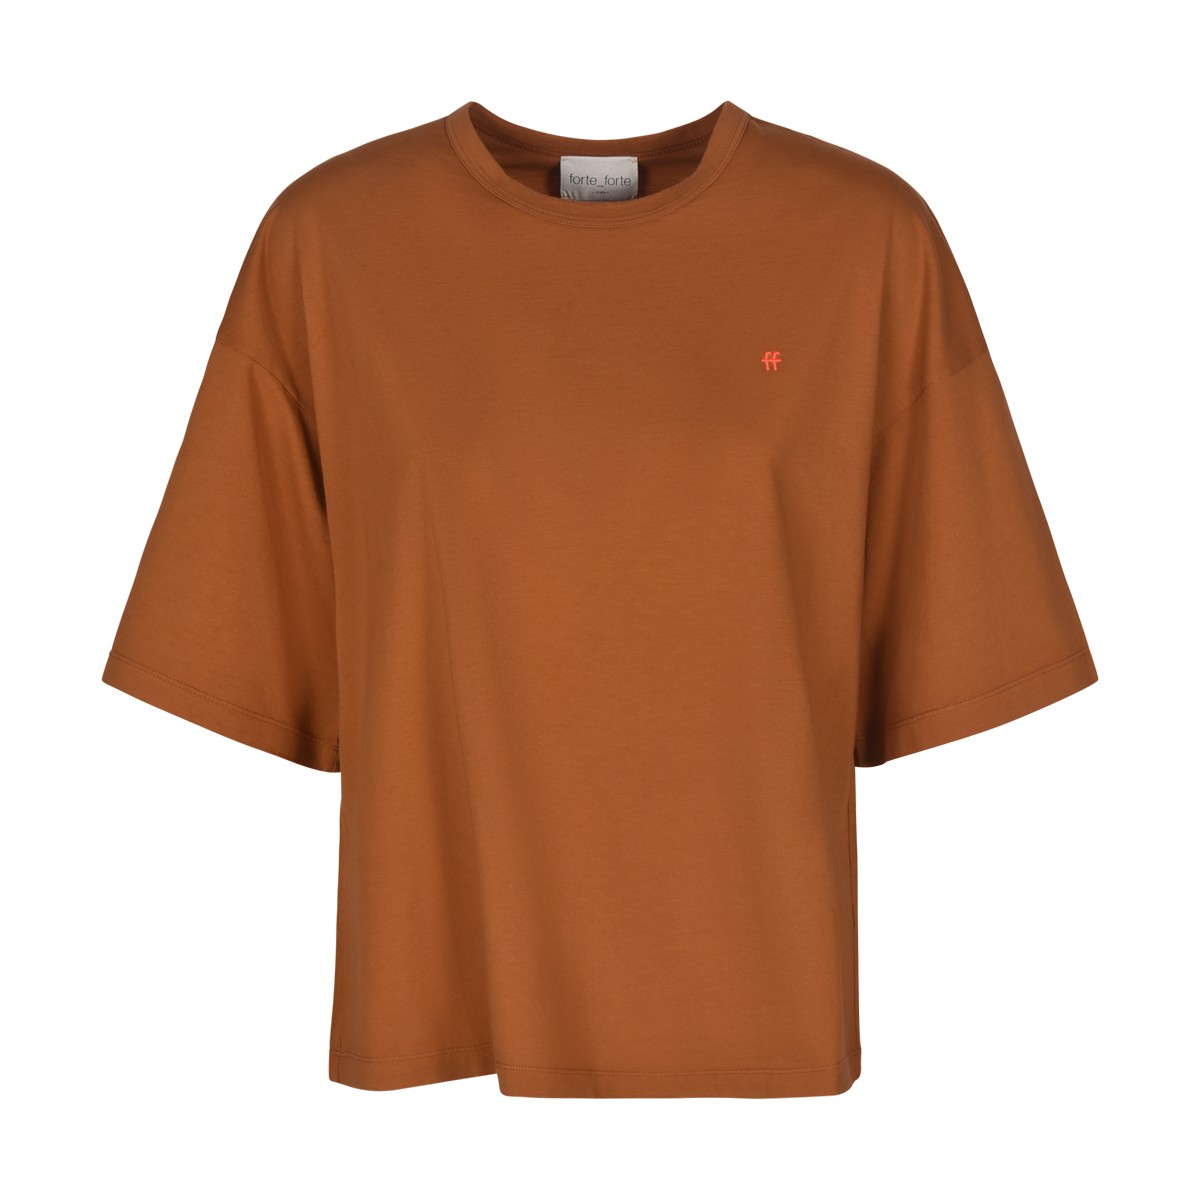 Tobacco Brown Cotton T-Shirt